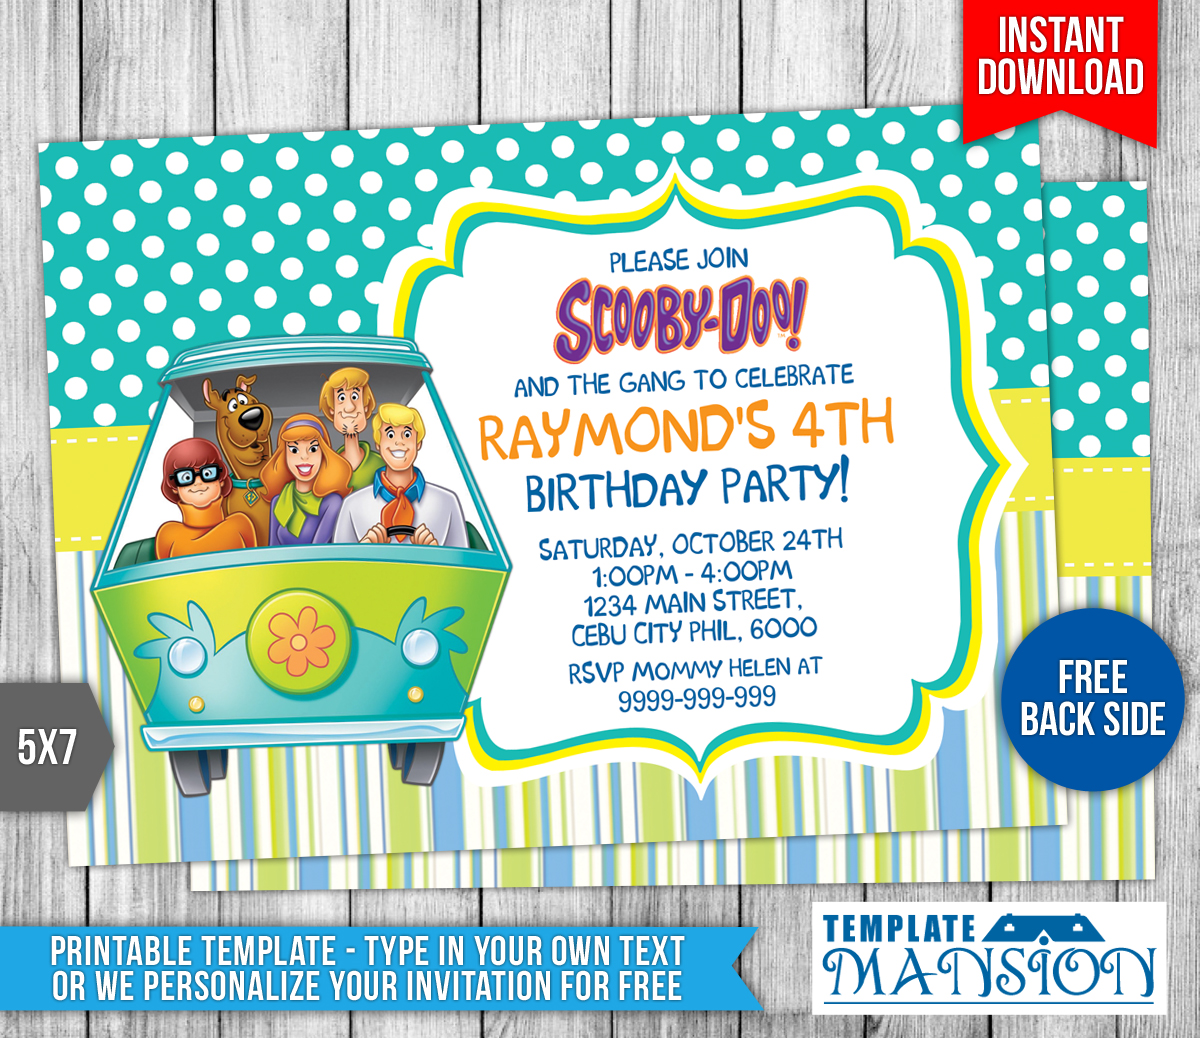 Scooby Doo Invitation Template Free